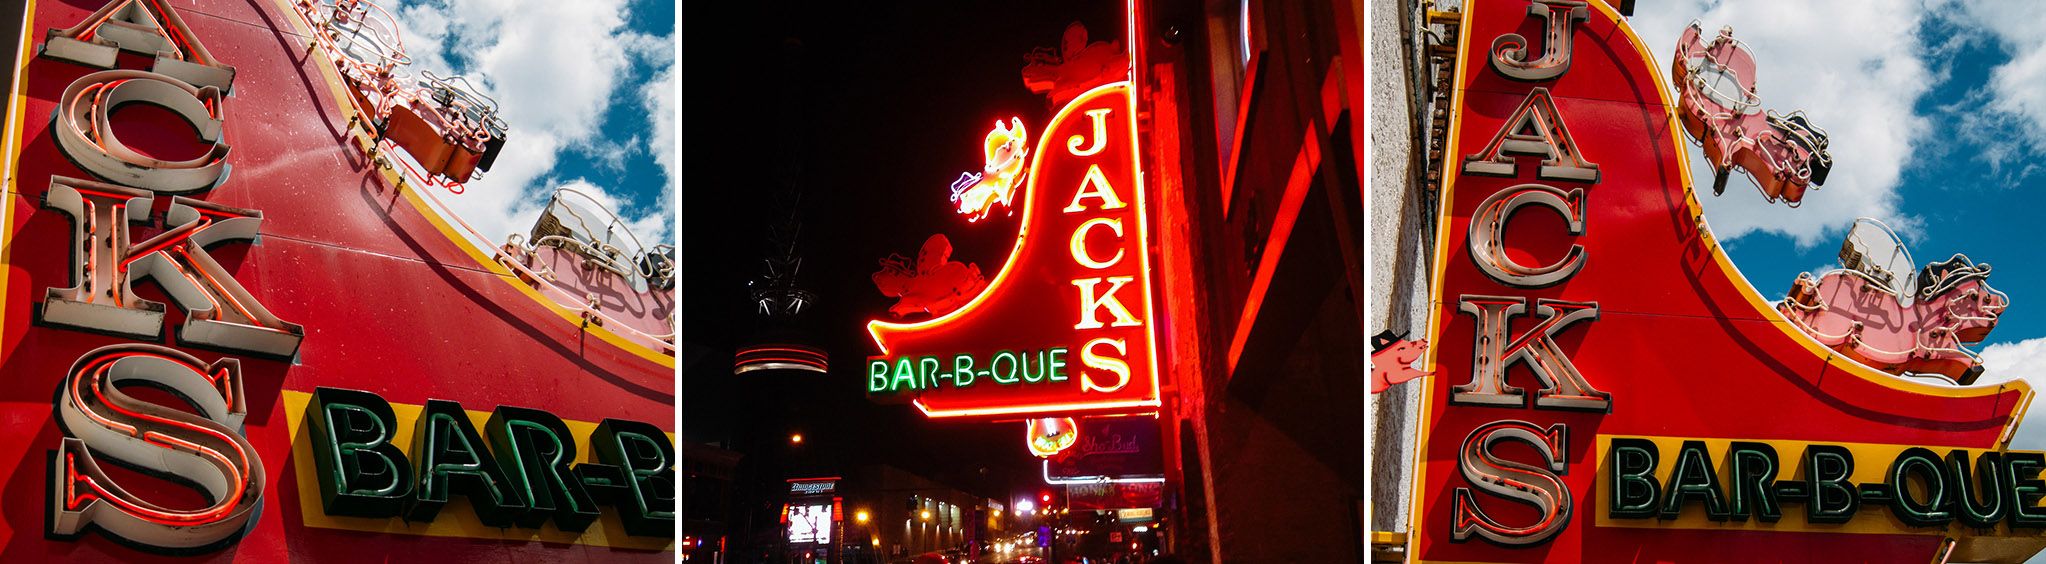 Jack's Bar-B-Que